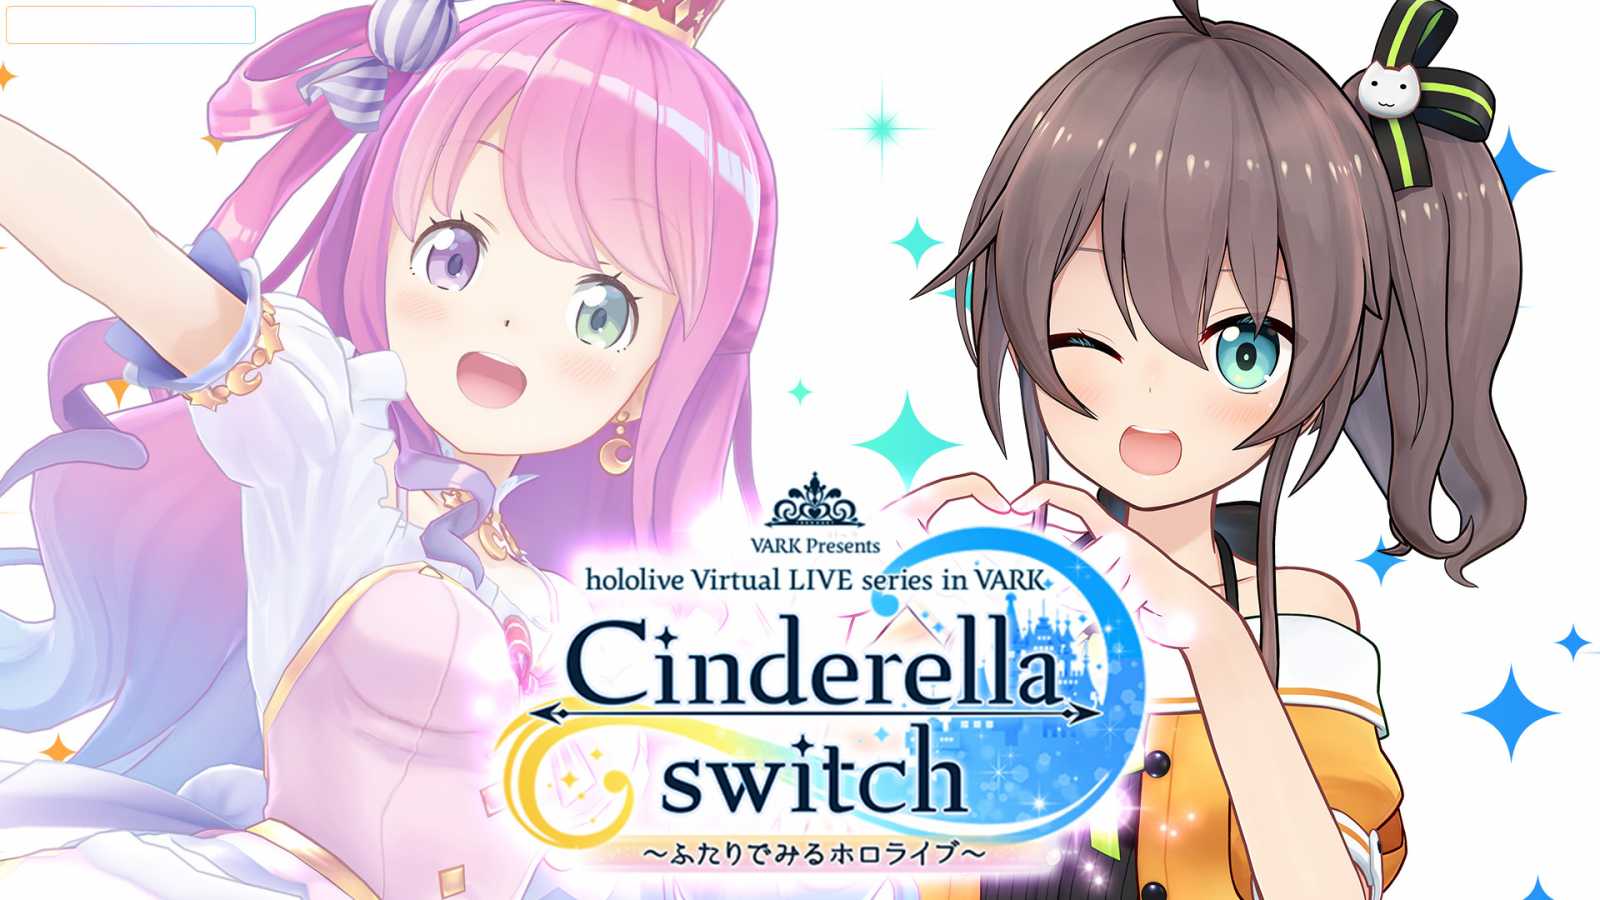 Himemori Luna and Natsuiro Matsuri to Headline "Cinderella Switch vol.4" Virtual Concert © Hololive / VARK Inc. All rights reserved.